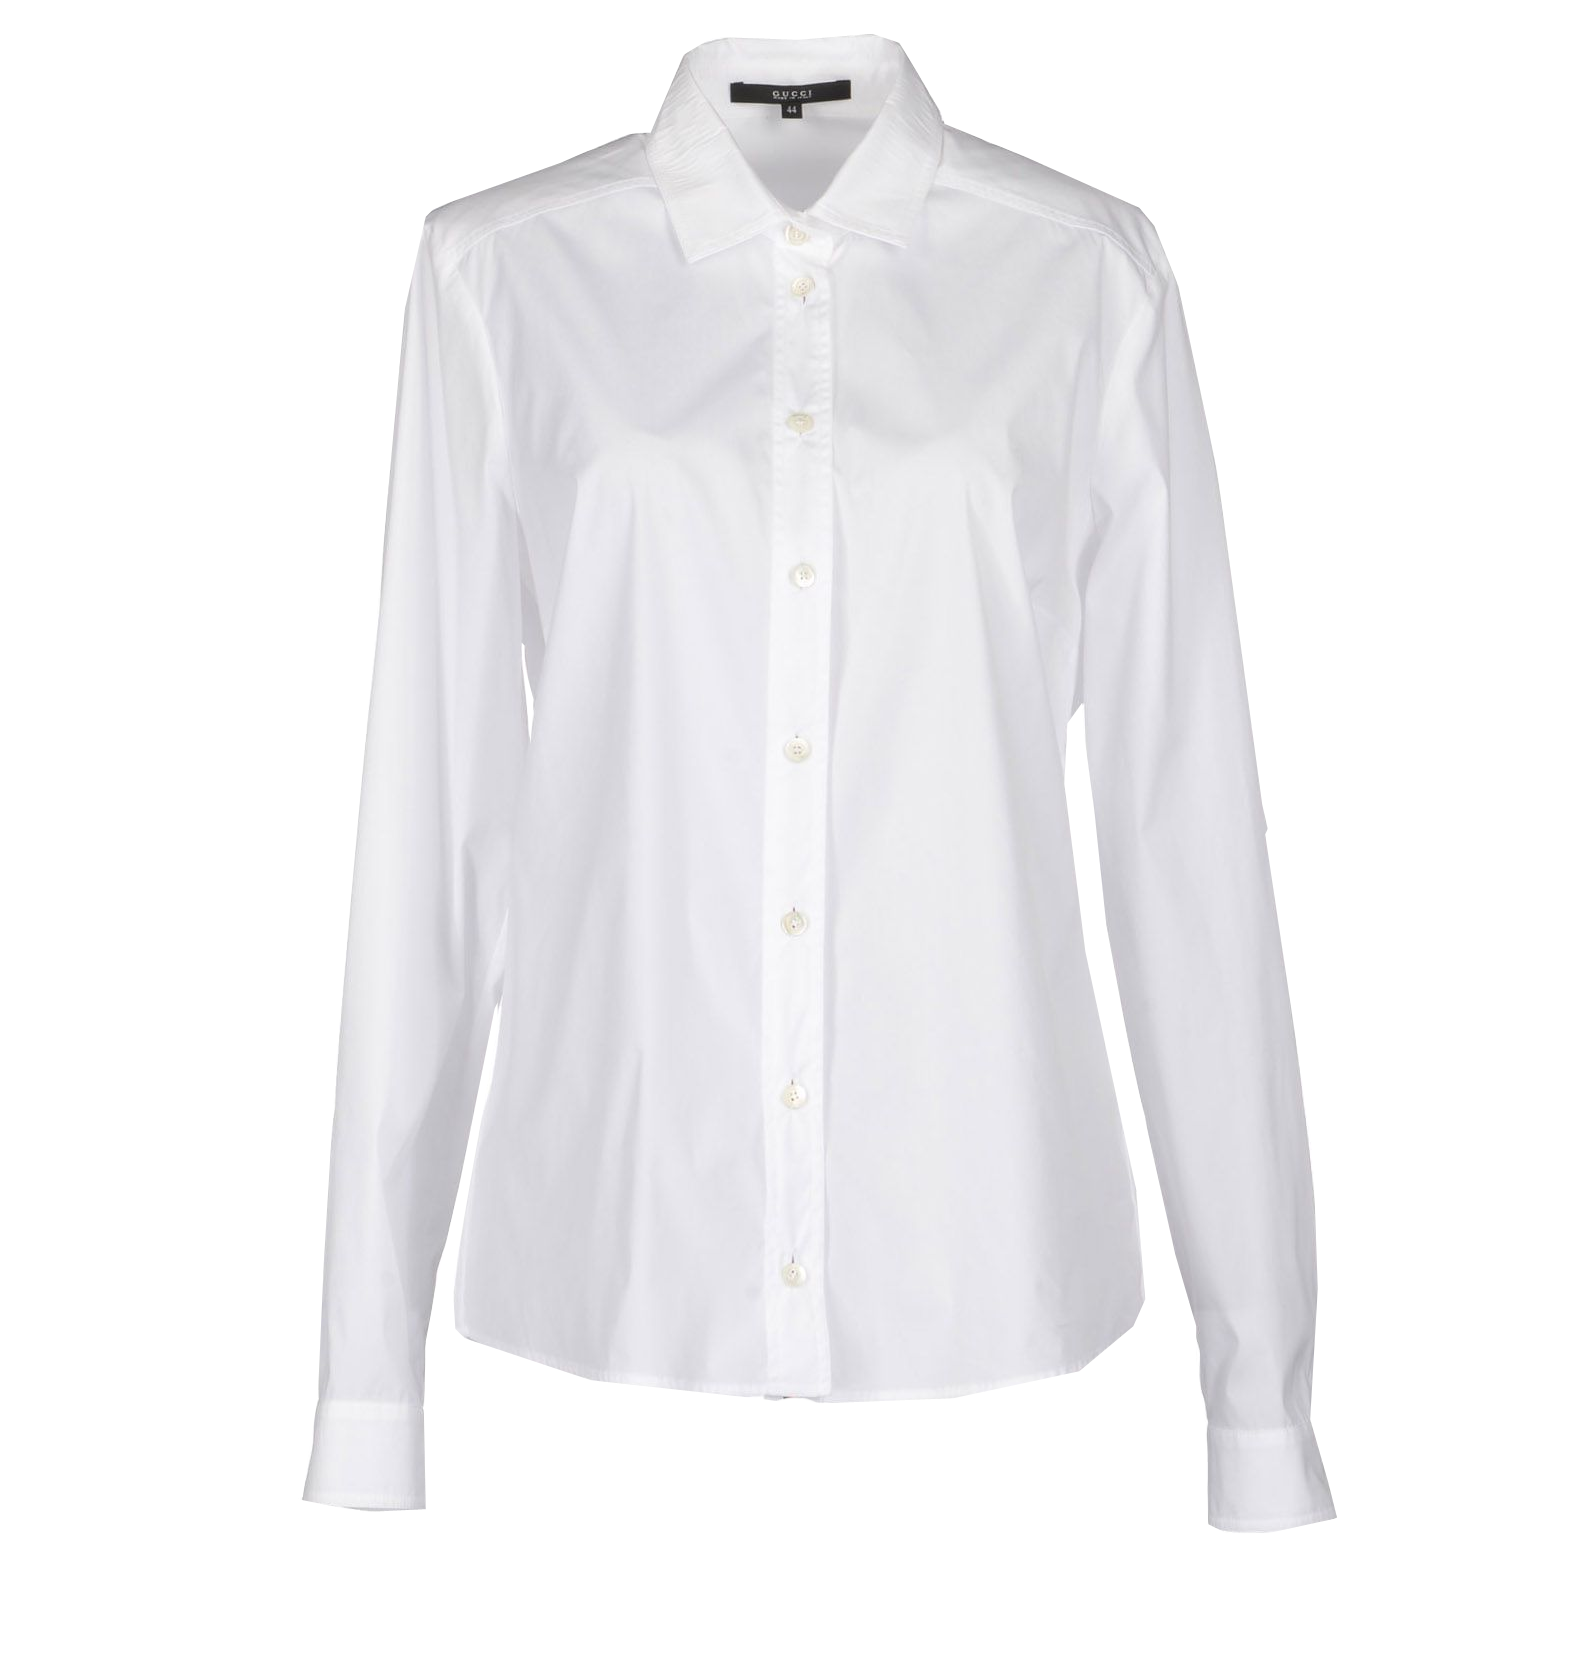 Gucci white long sleeved single button cuffs shirt